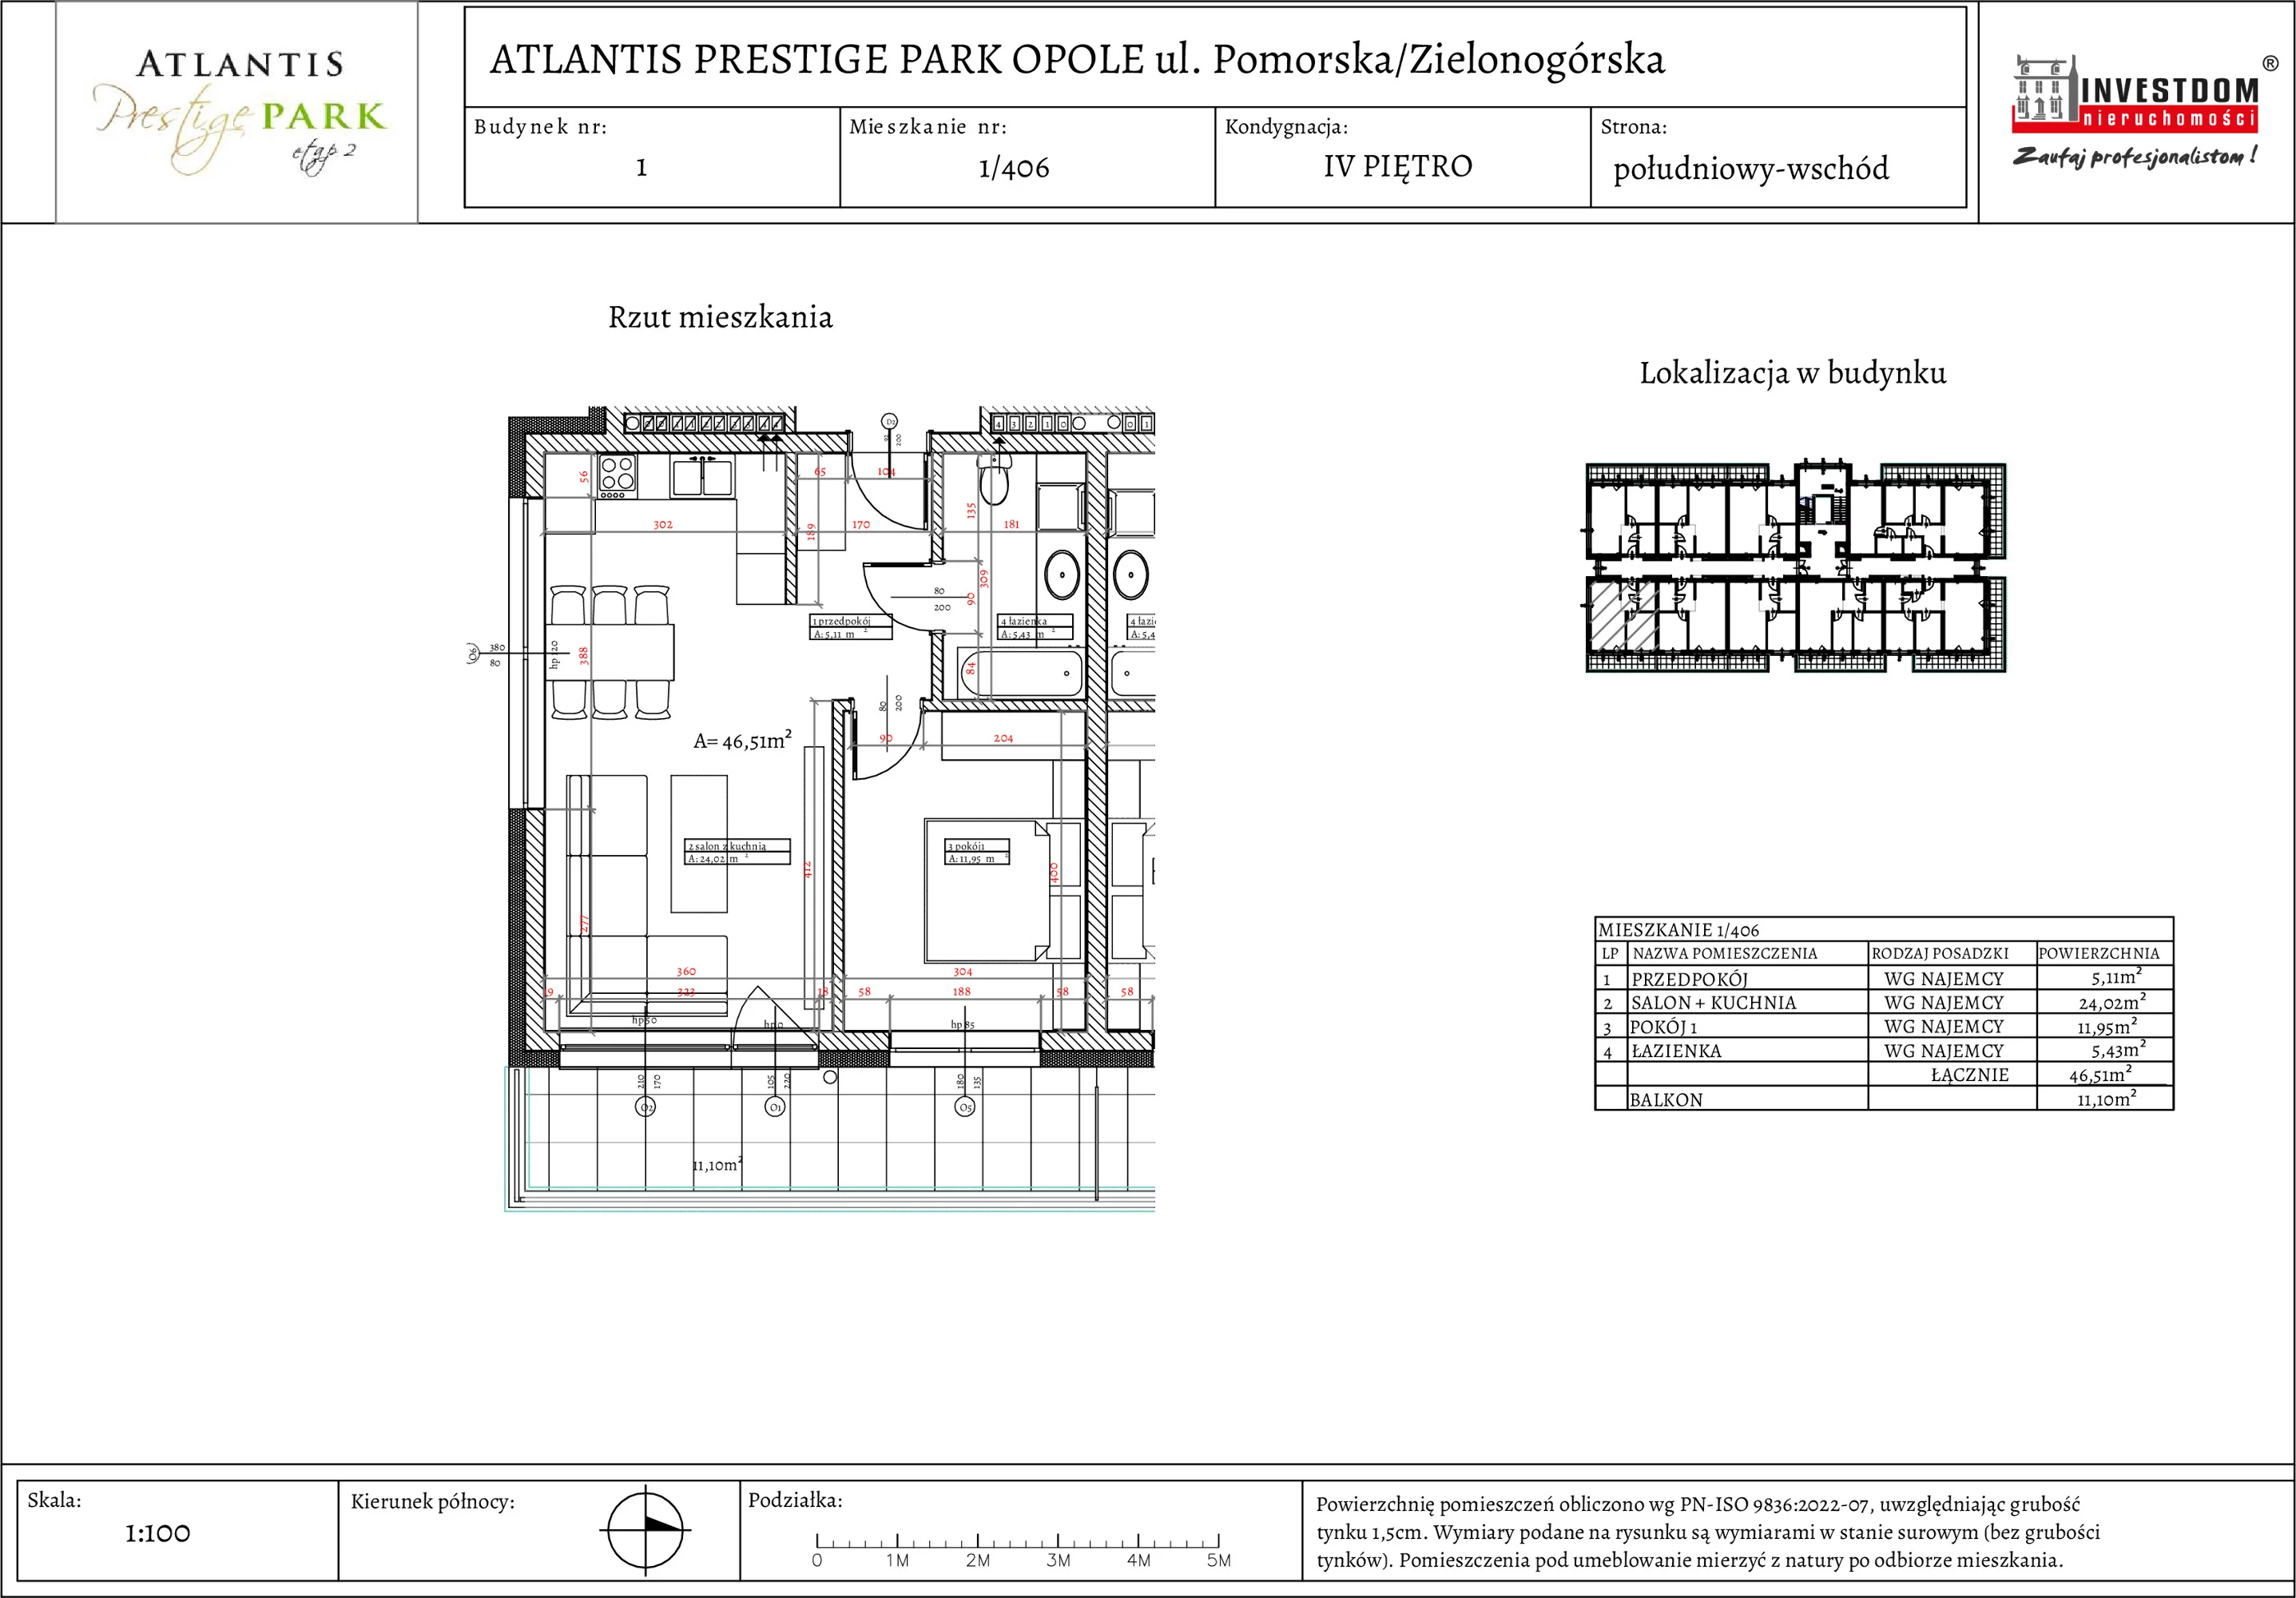 Apartament 46,51 m², piętro 4, oferta nr 1/406, Atlantis Prestige Park, Opole, Malinka, ul. Pomorska / Zielonogórska / Harcmistrza Kamińskiego